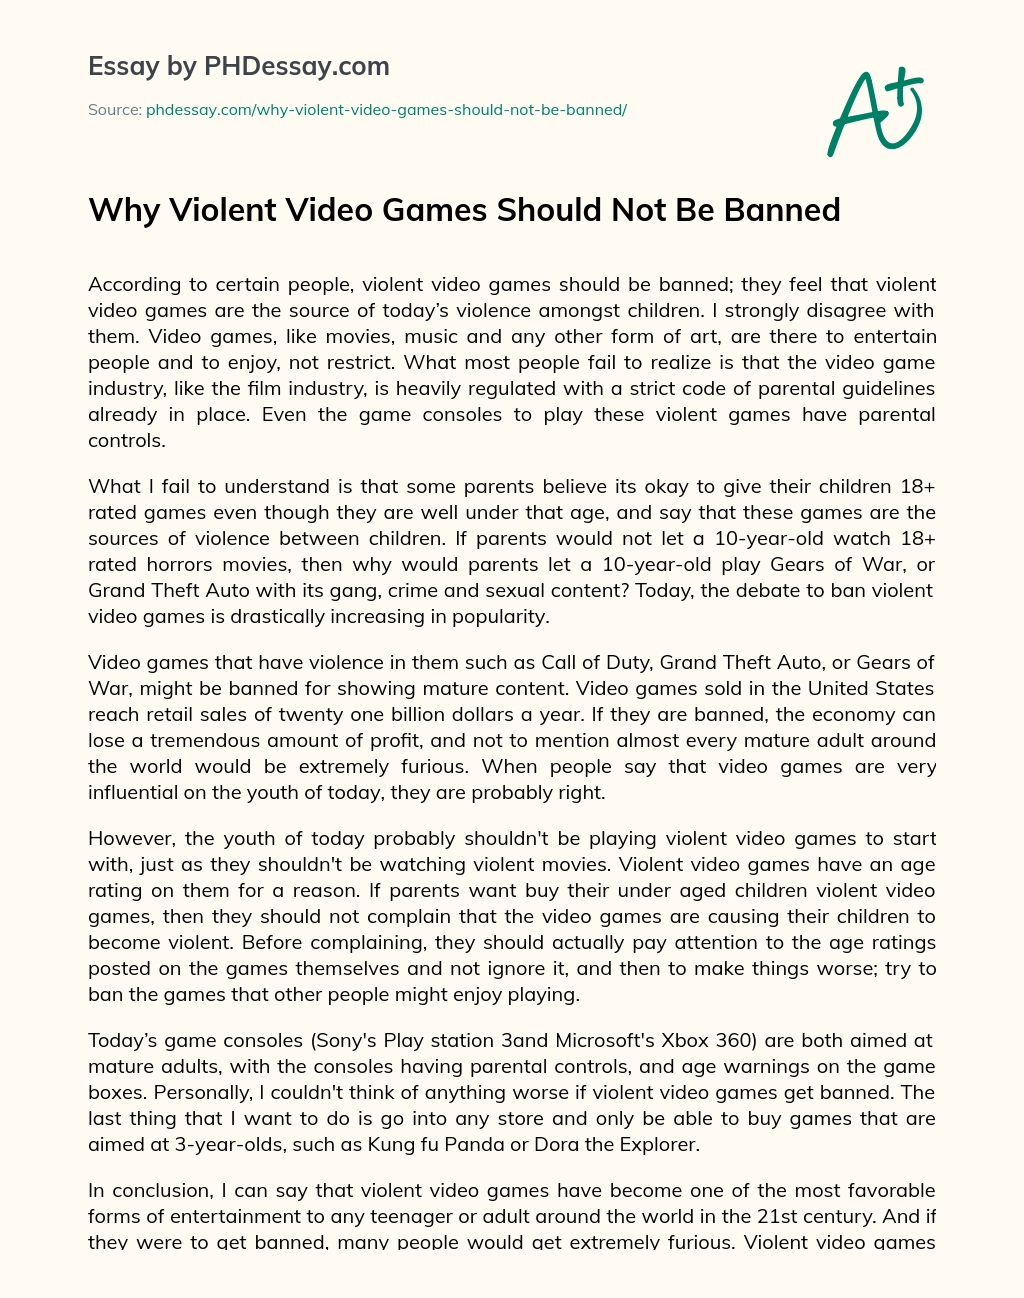 should video games be banned argumentative essay